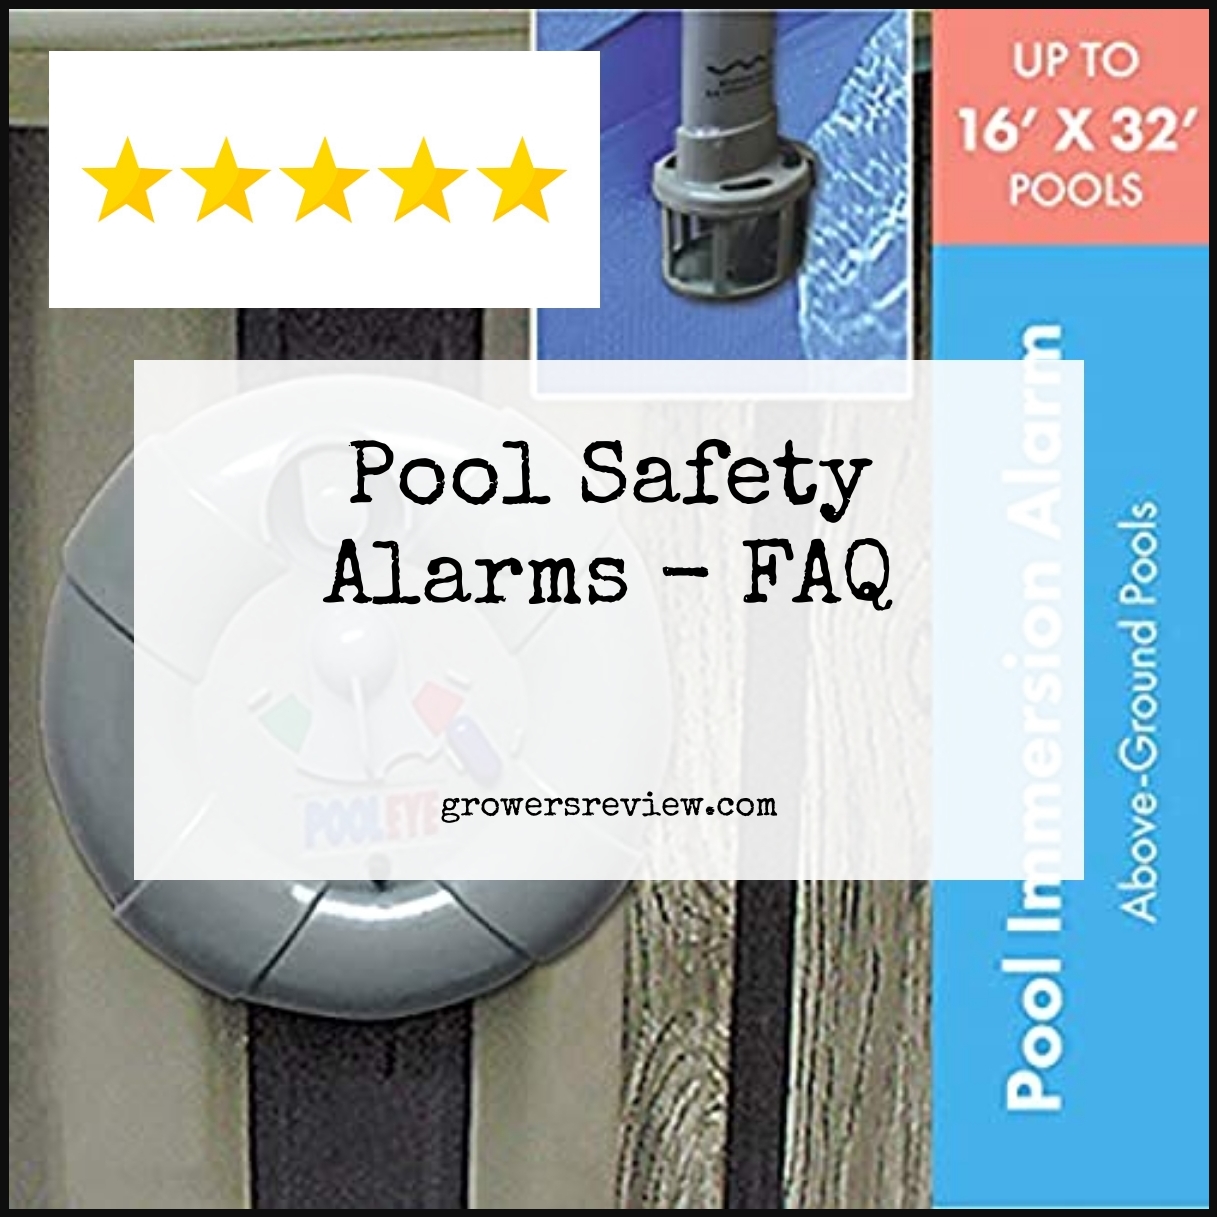 Pool Safety Alarms - FAQ